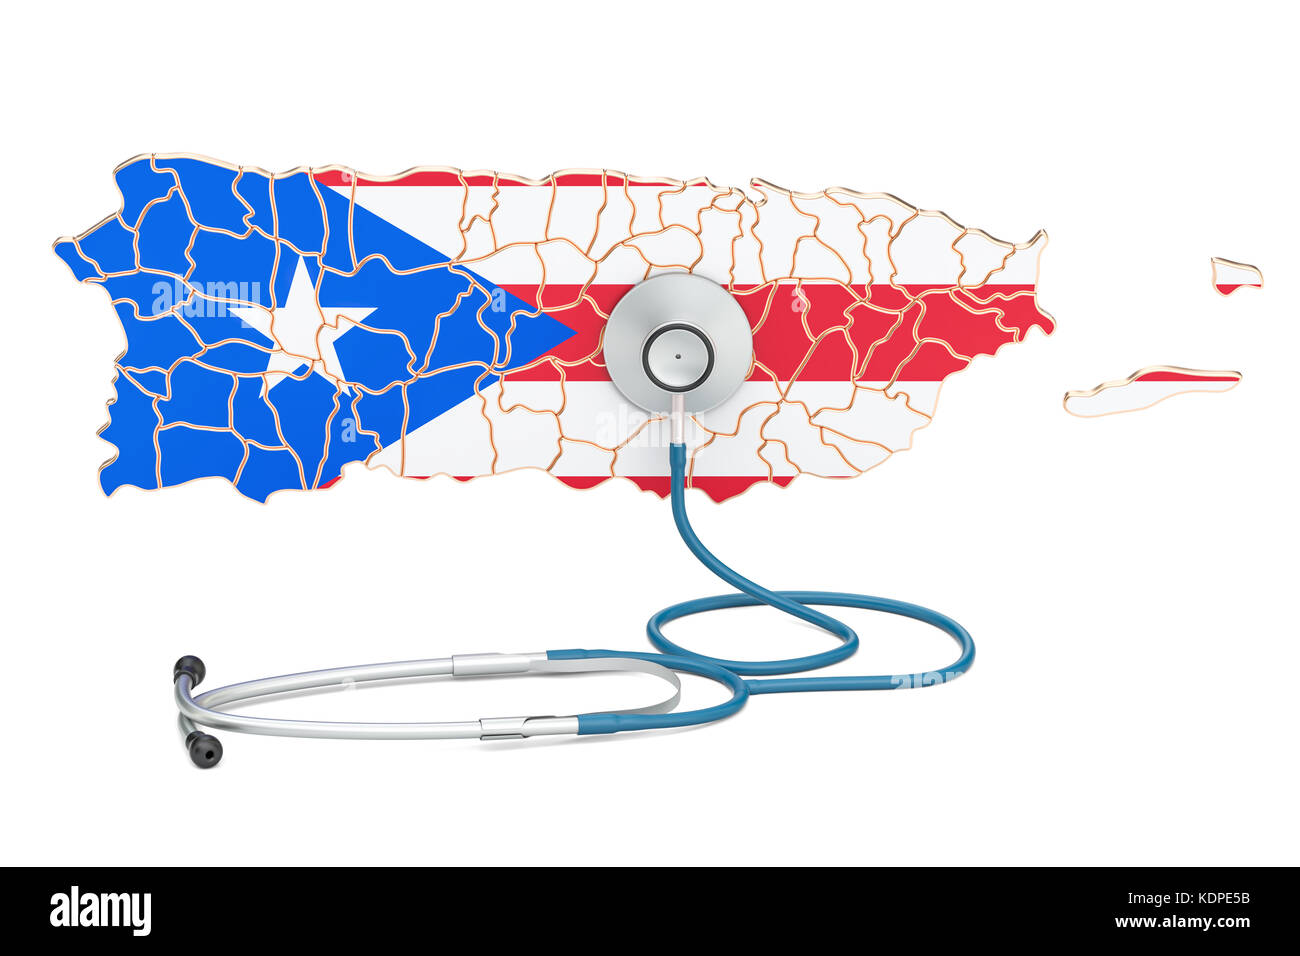 Puerto Rico Karte mit Stethoskop, national Health Care Concept, 3D-Rendering Stockfoto